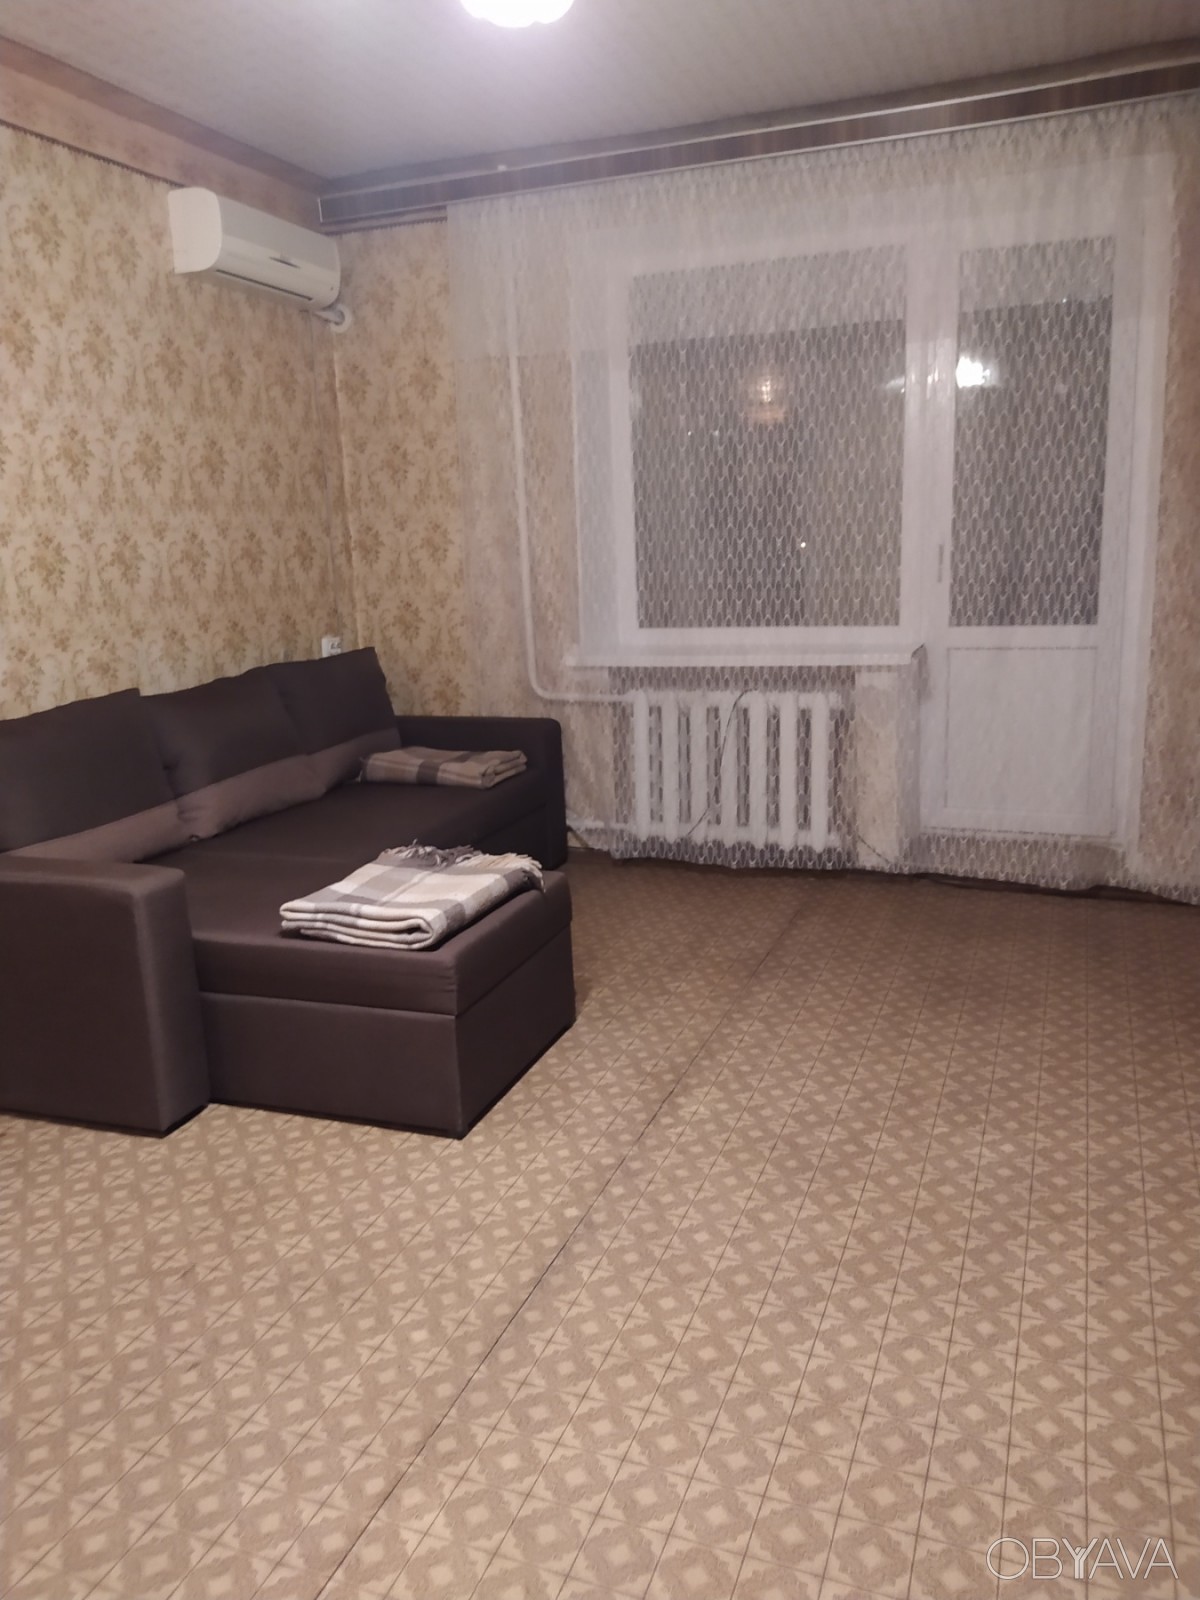 Сниму квартиру в сарапуле с мебелью